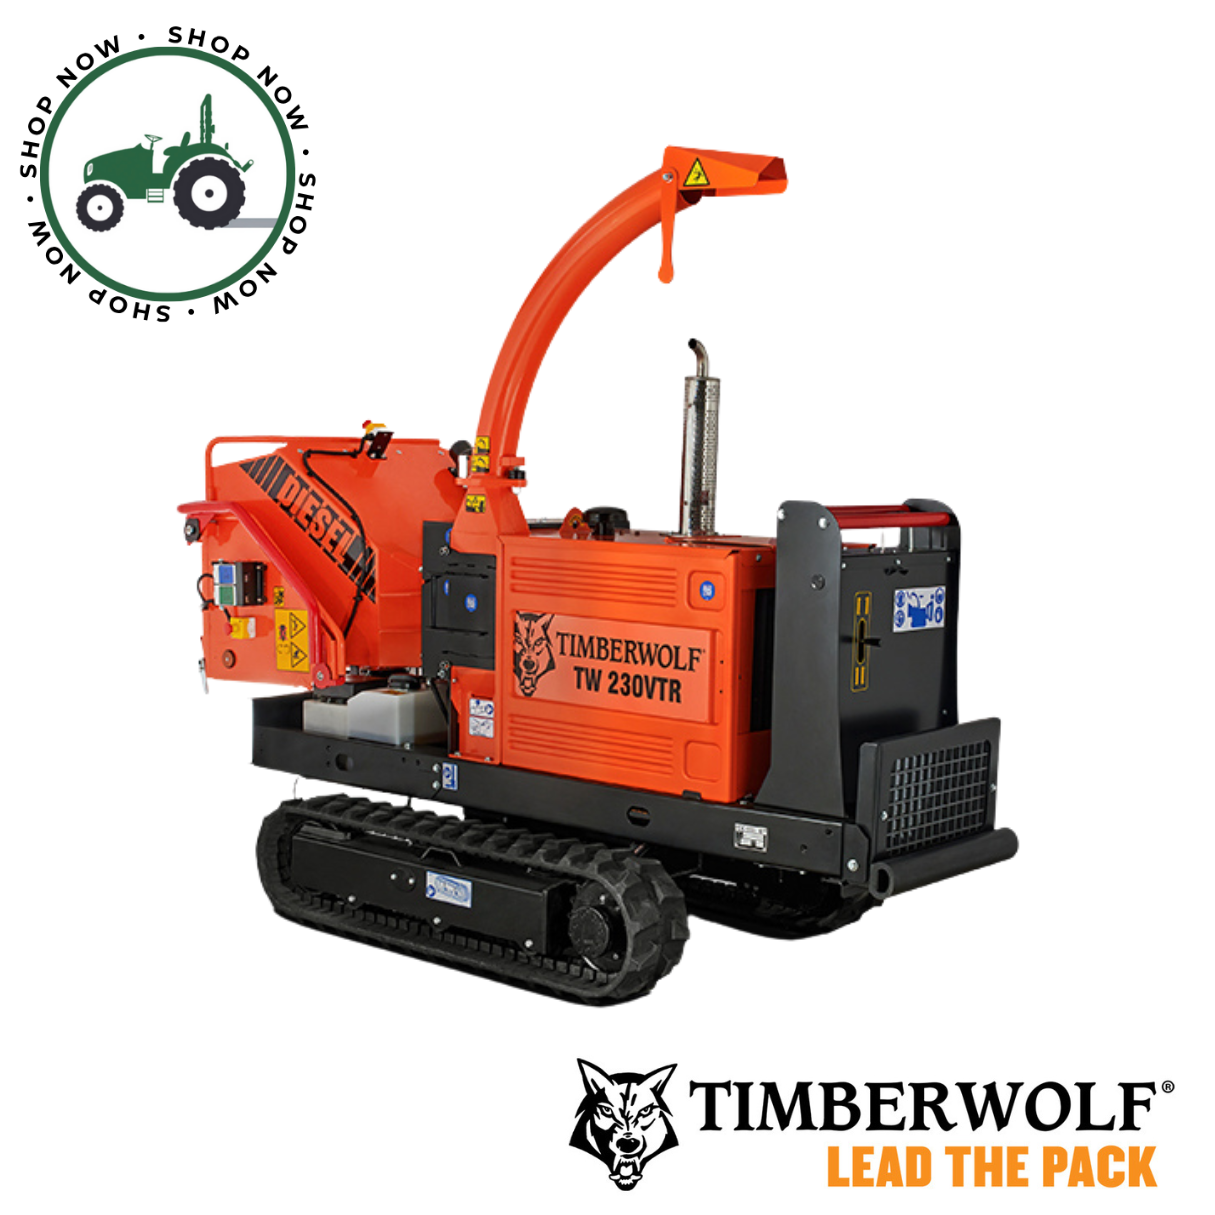 Timberwolf TW 230VTR Diesel Wood Chipper